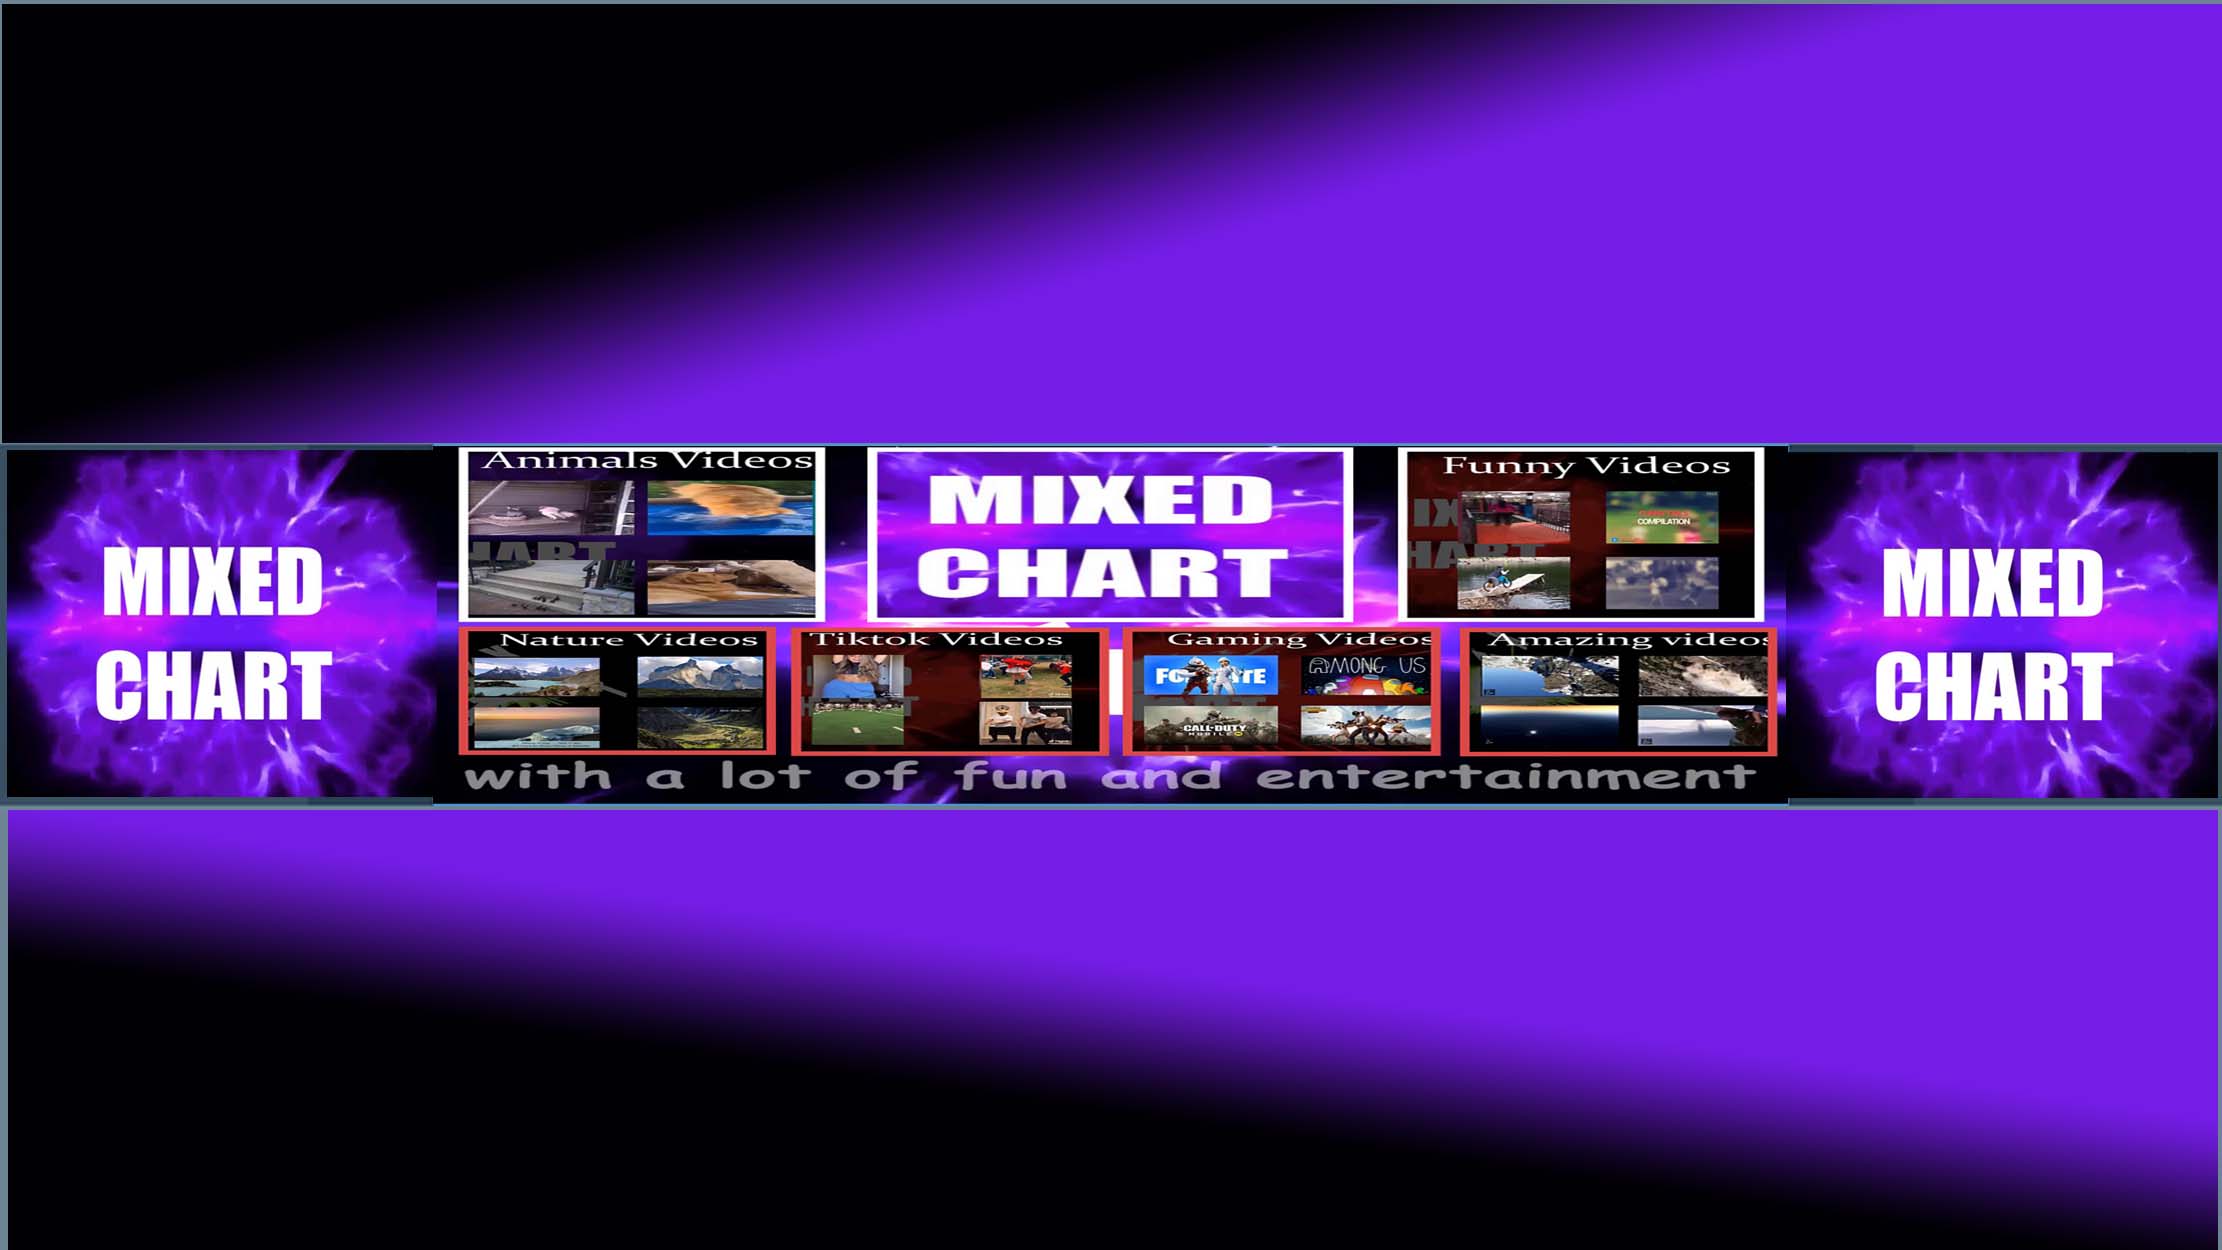 MIXED CHART